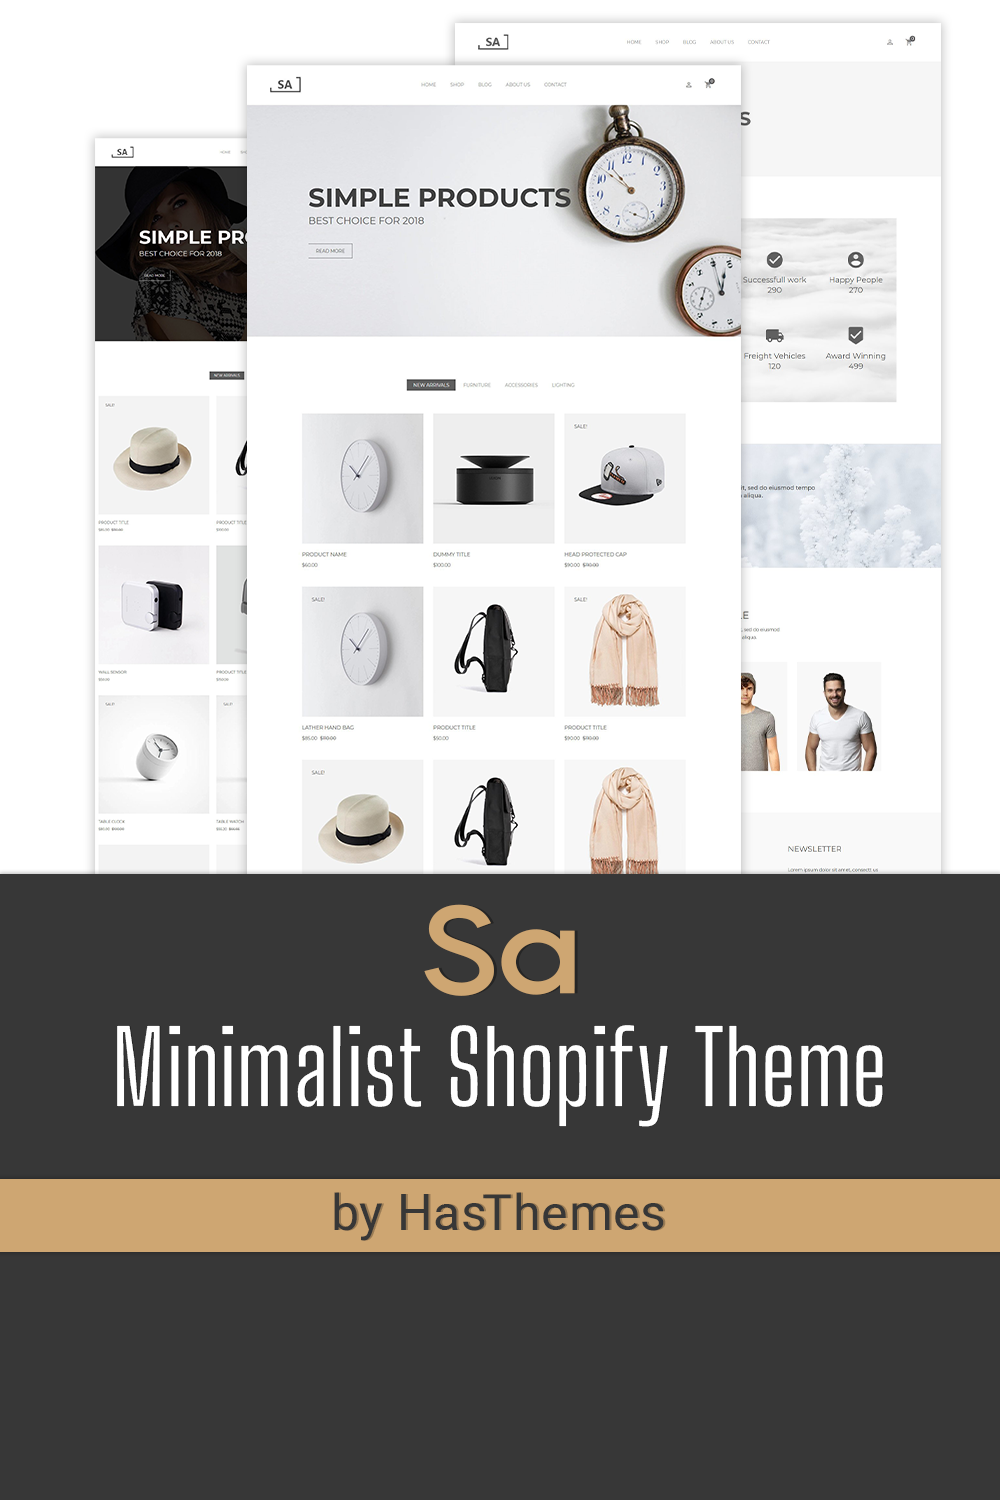 Minimalist shopify theme – sa of pinterest.